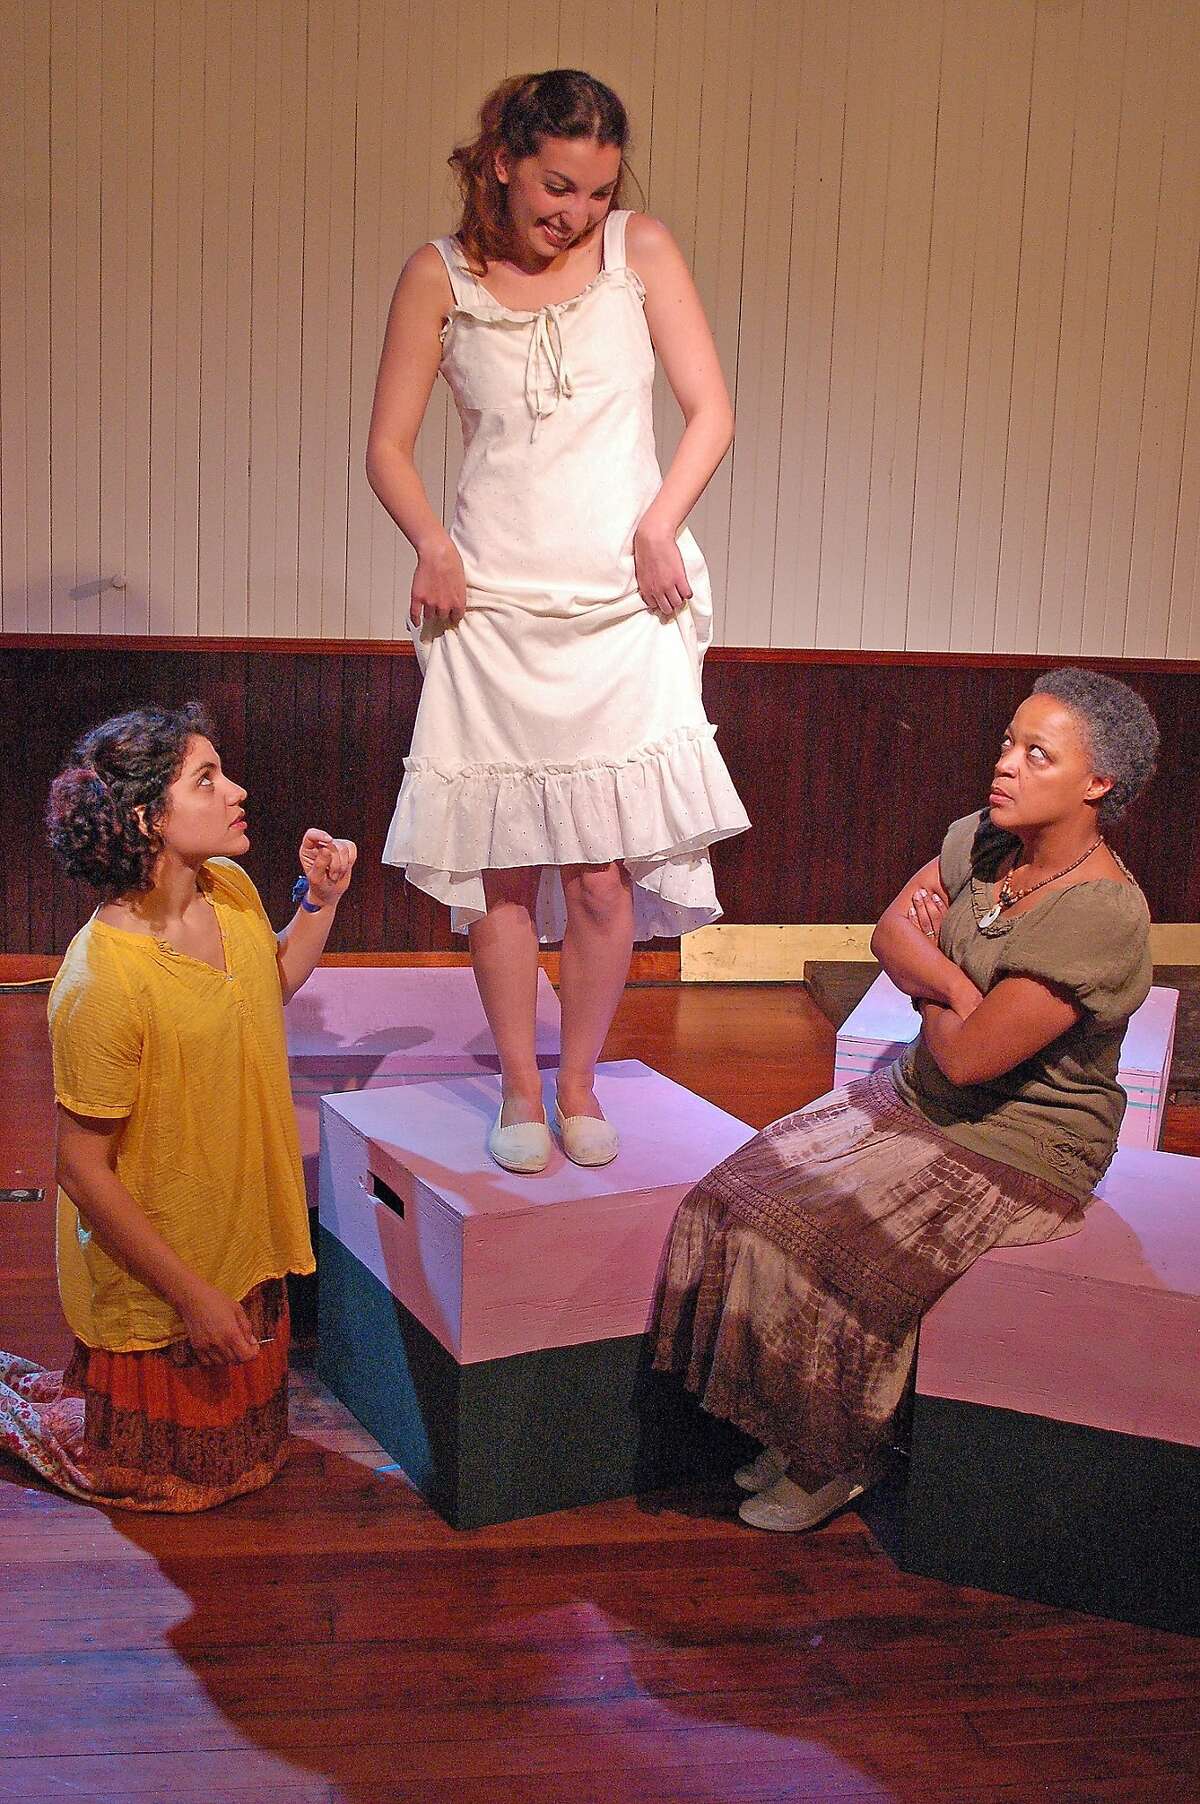 Senhora Costa (Cathleen Riddley, right) and daughter Helena (Carla Pauli, left) help prepare Belmira's (Livia Demarchi, center) wedding dress in Alter Theater's "The River Bride"